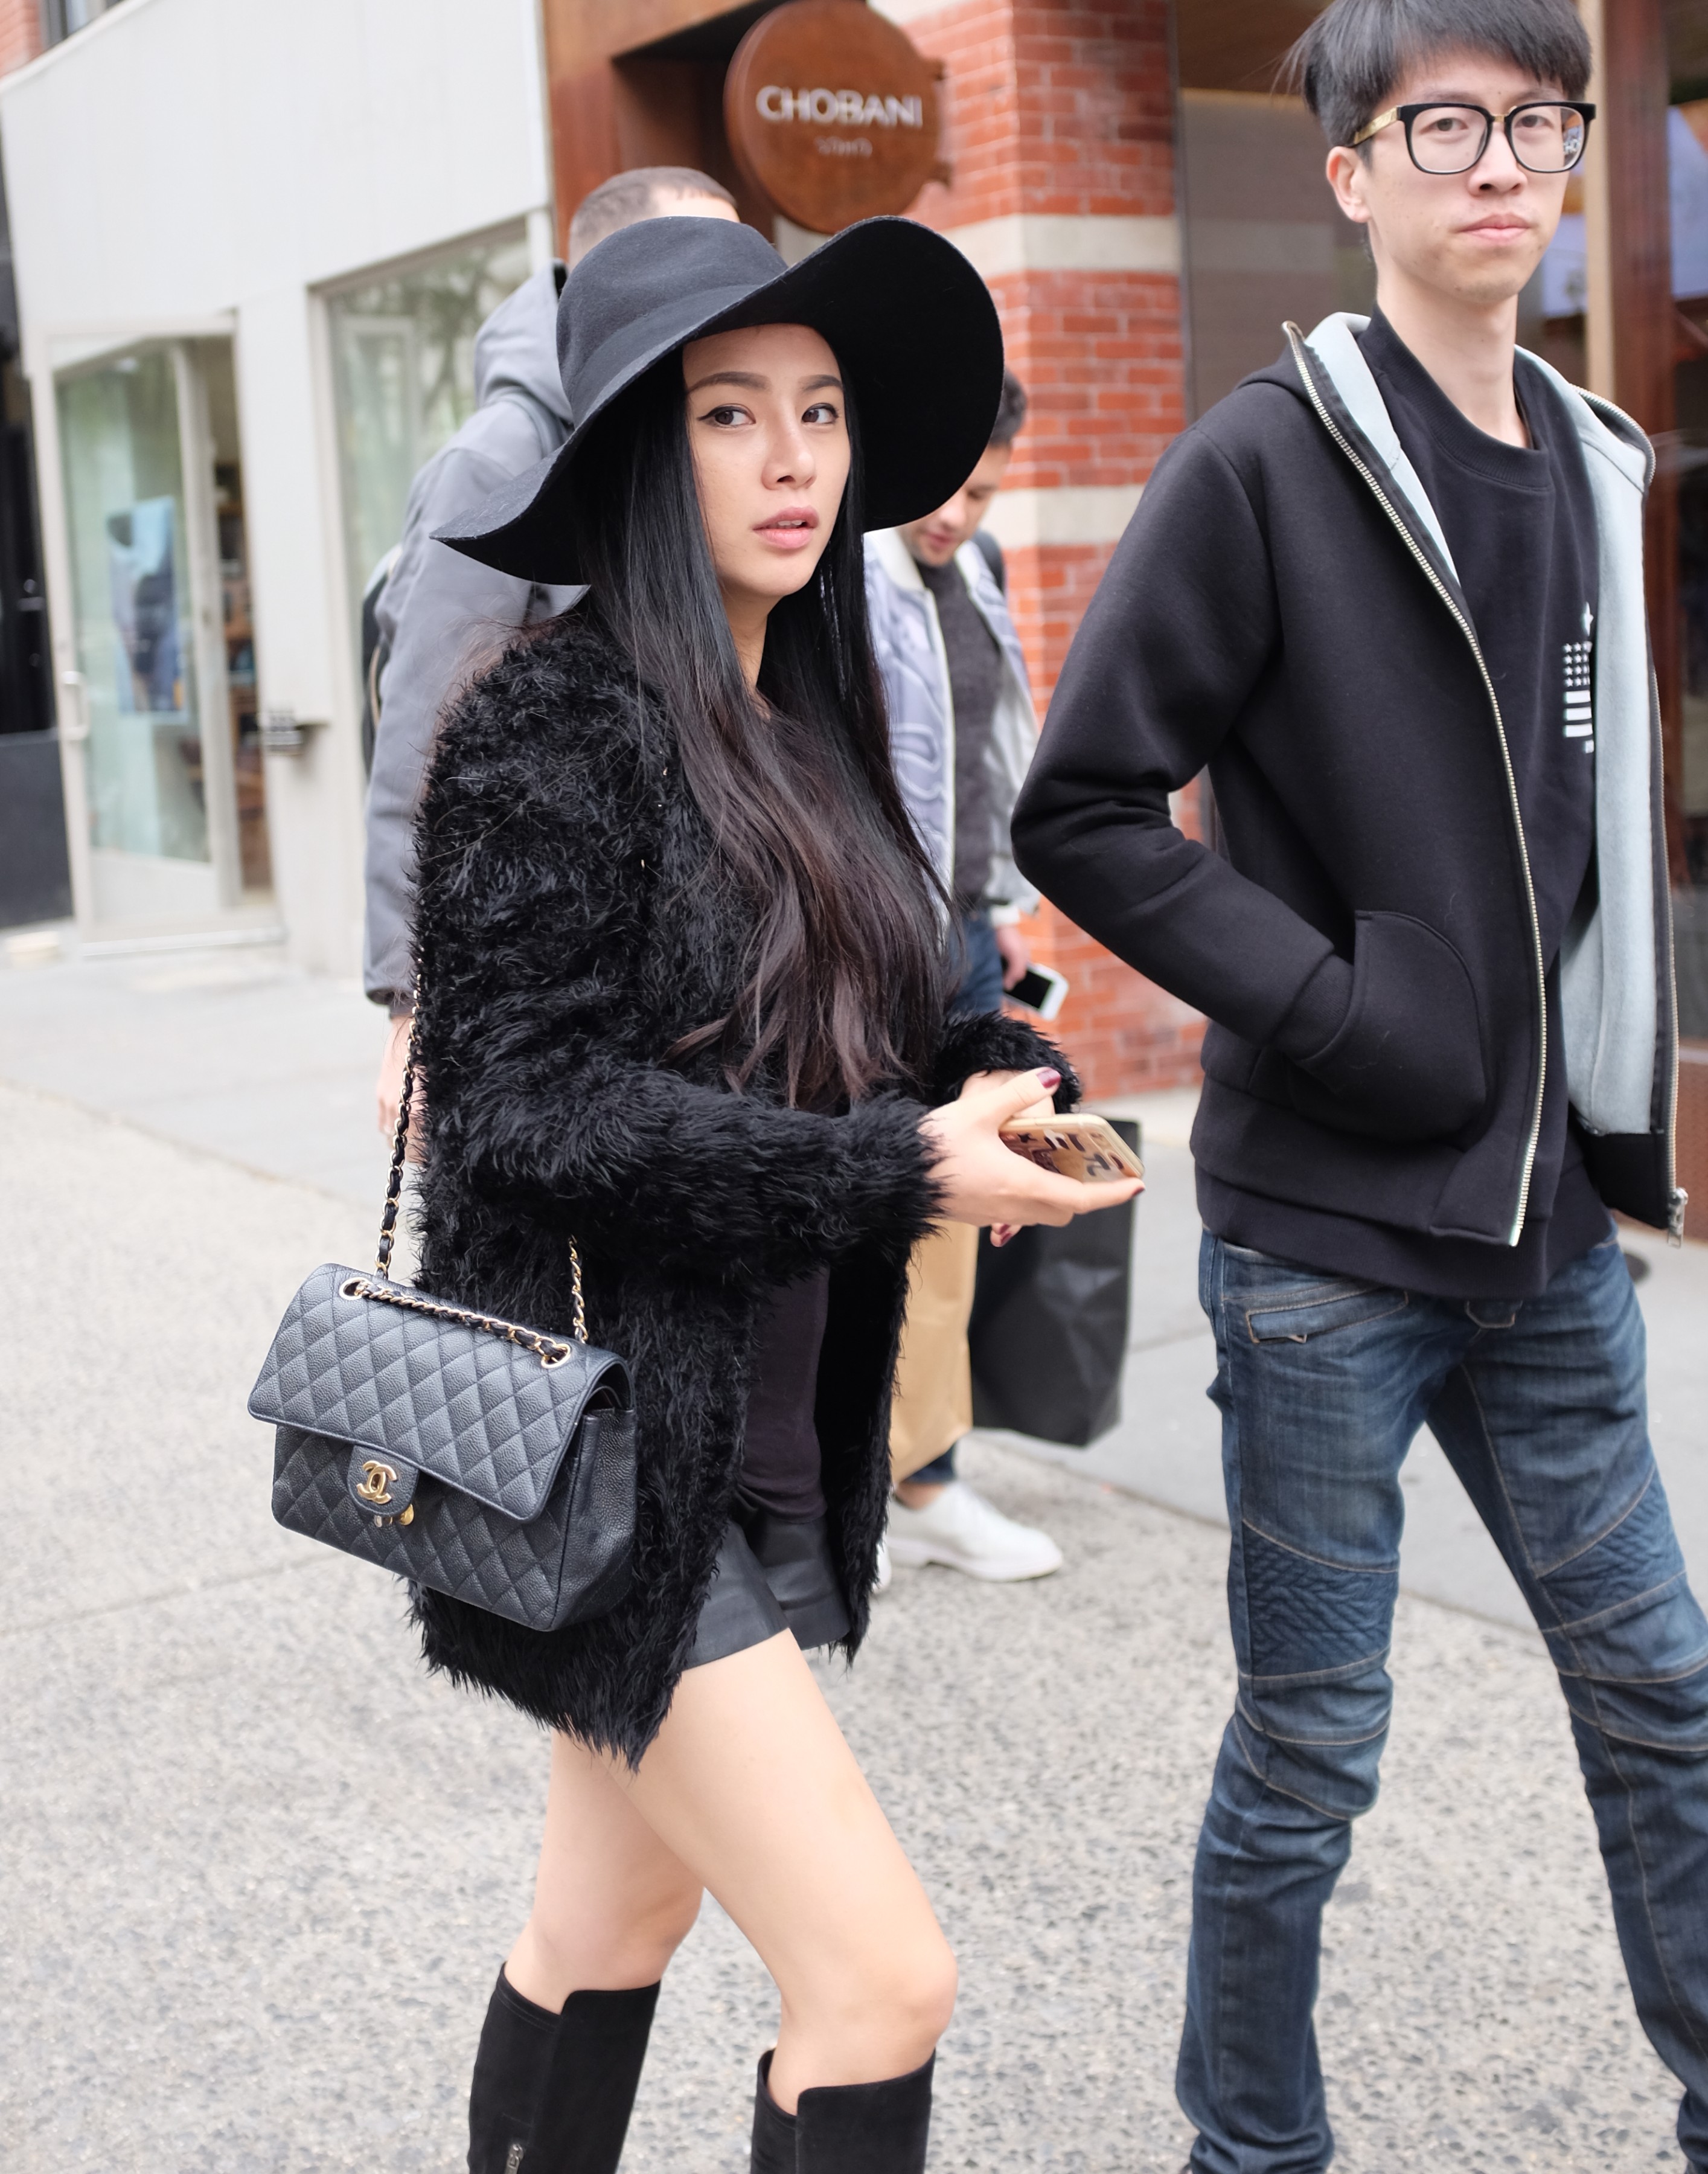 Asian girl wearing black brimmed hat